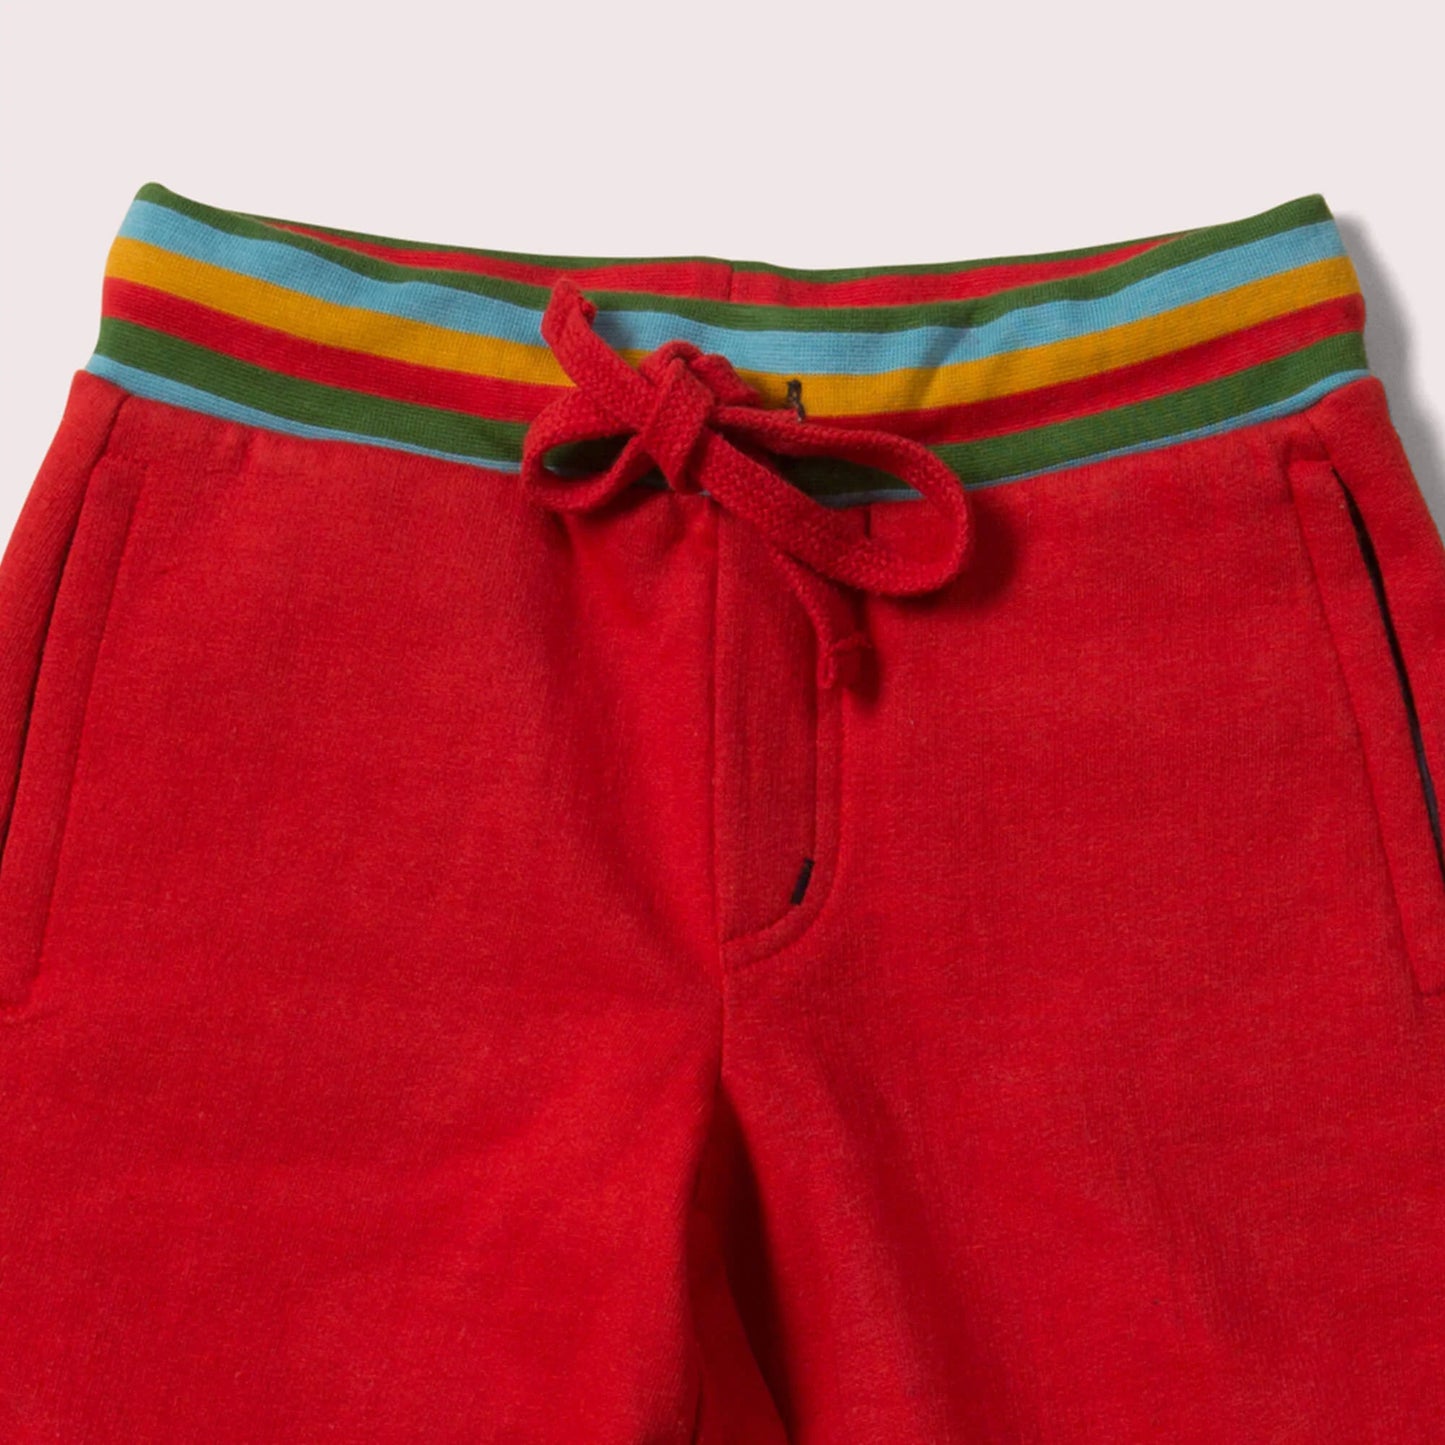 Comfy Jogger Shorts - Red